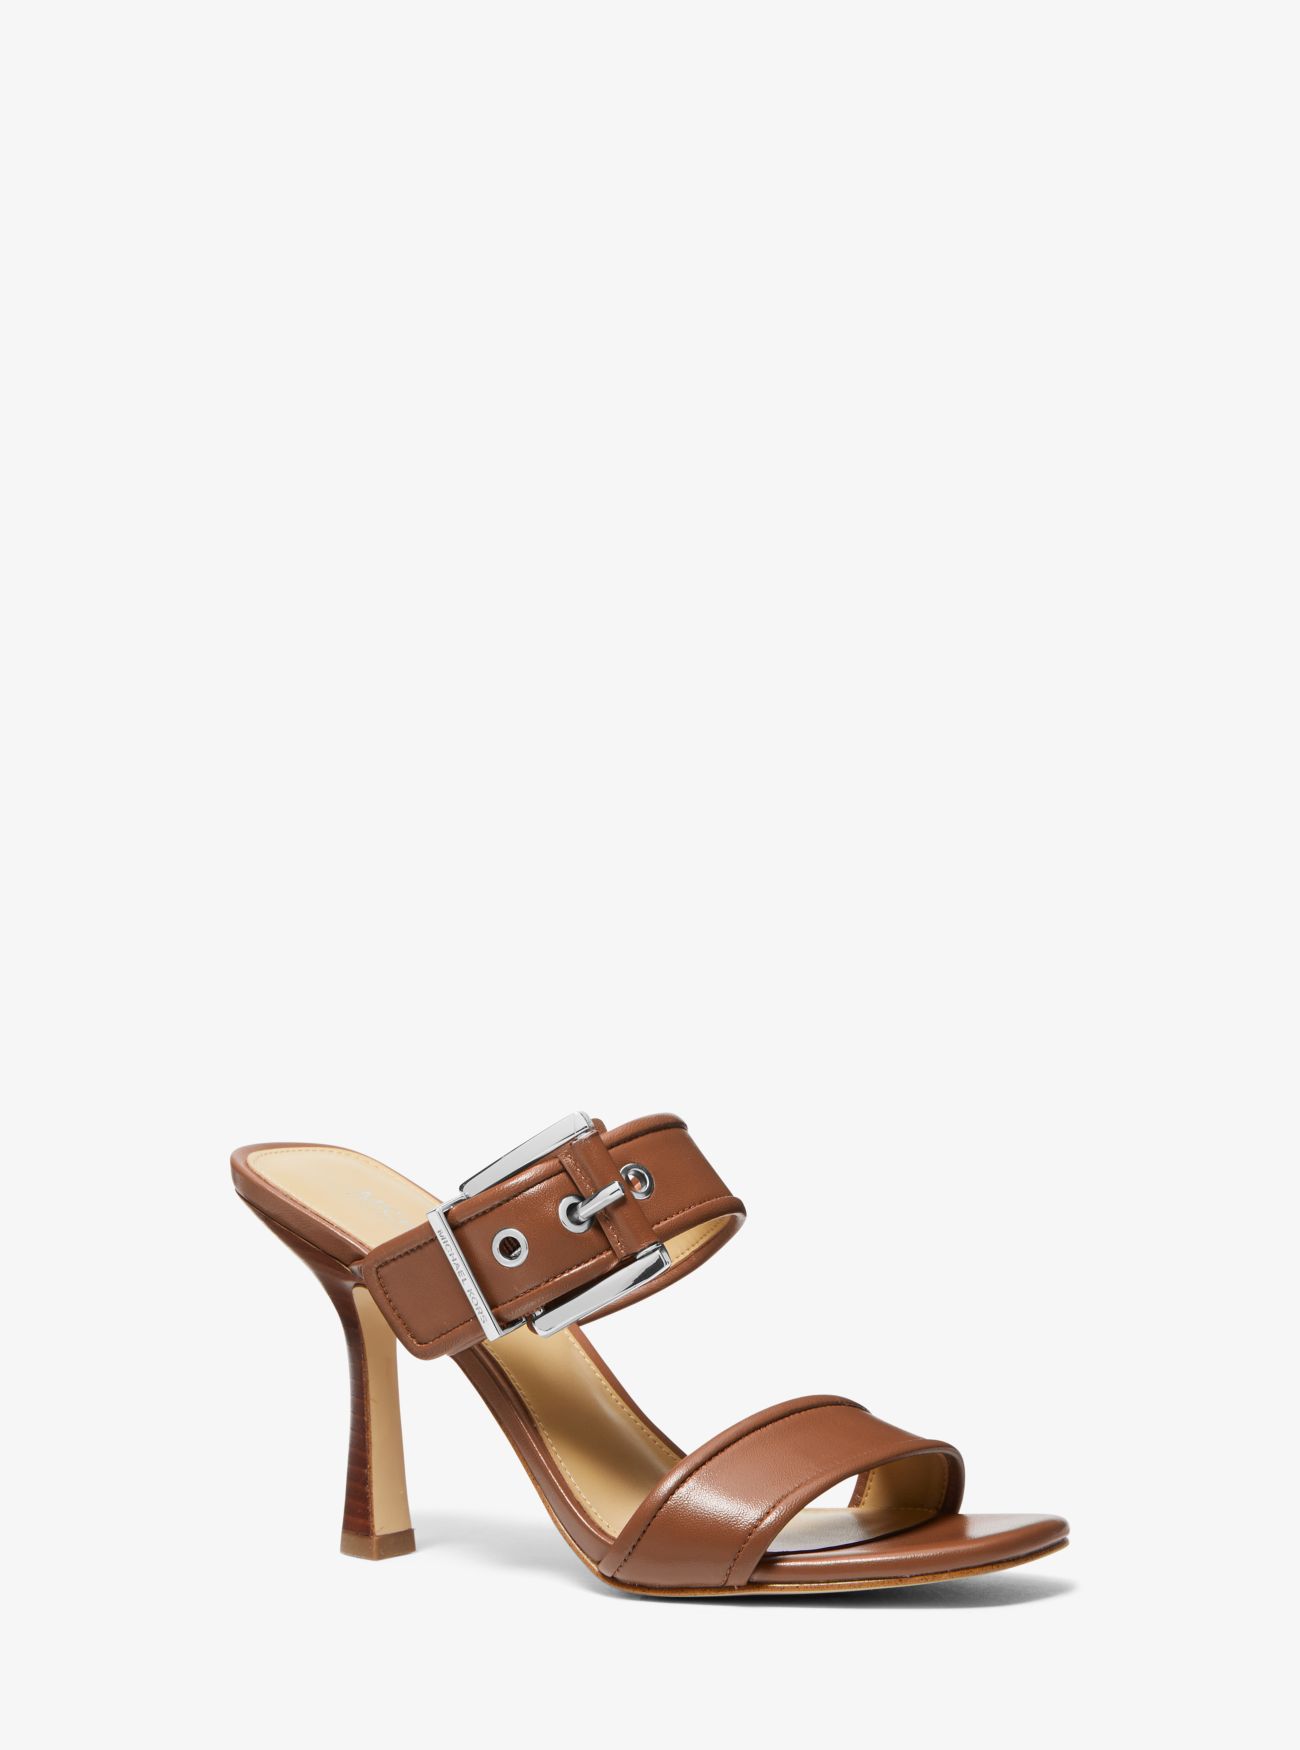 MK Colby Leather Sandal - Luggage Brown - Michael Kors